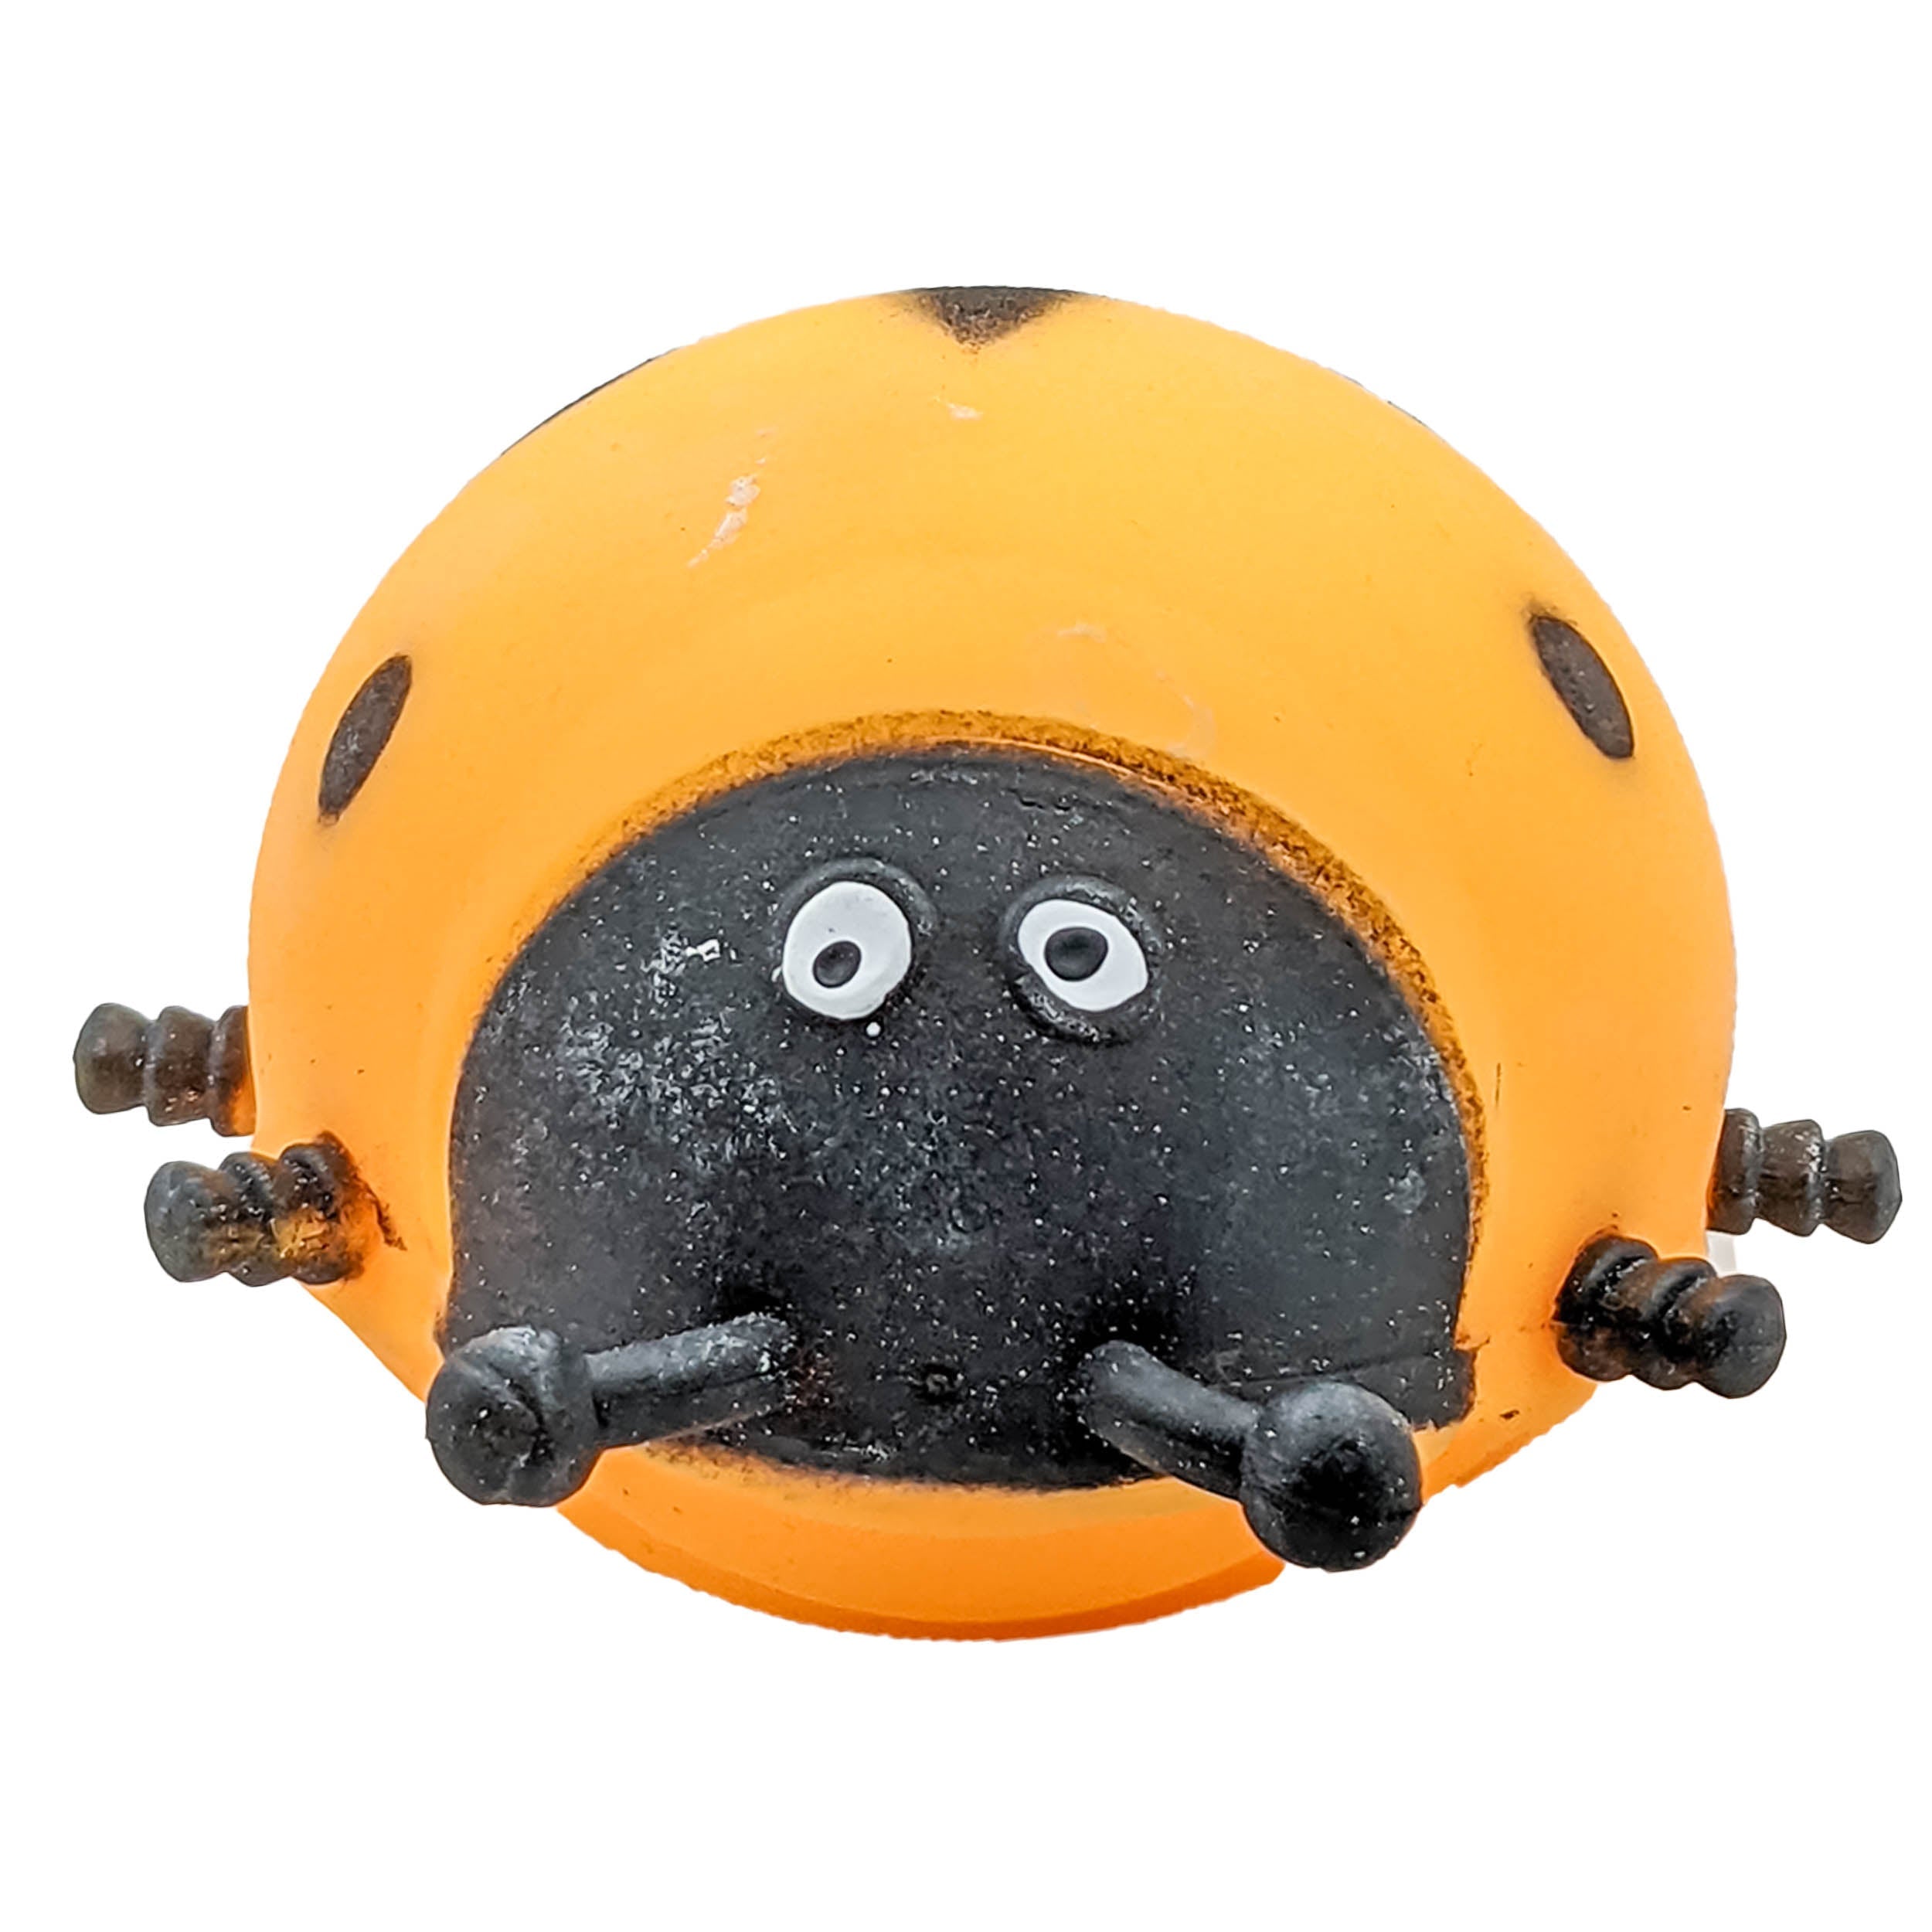 Beetle squishy fidget toys